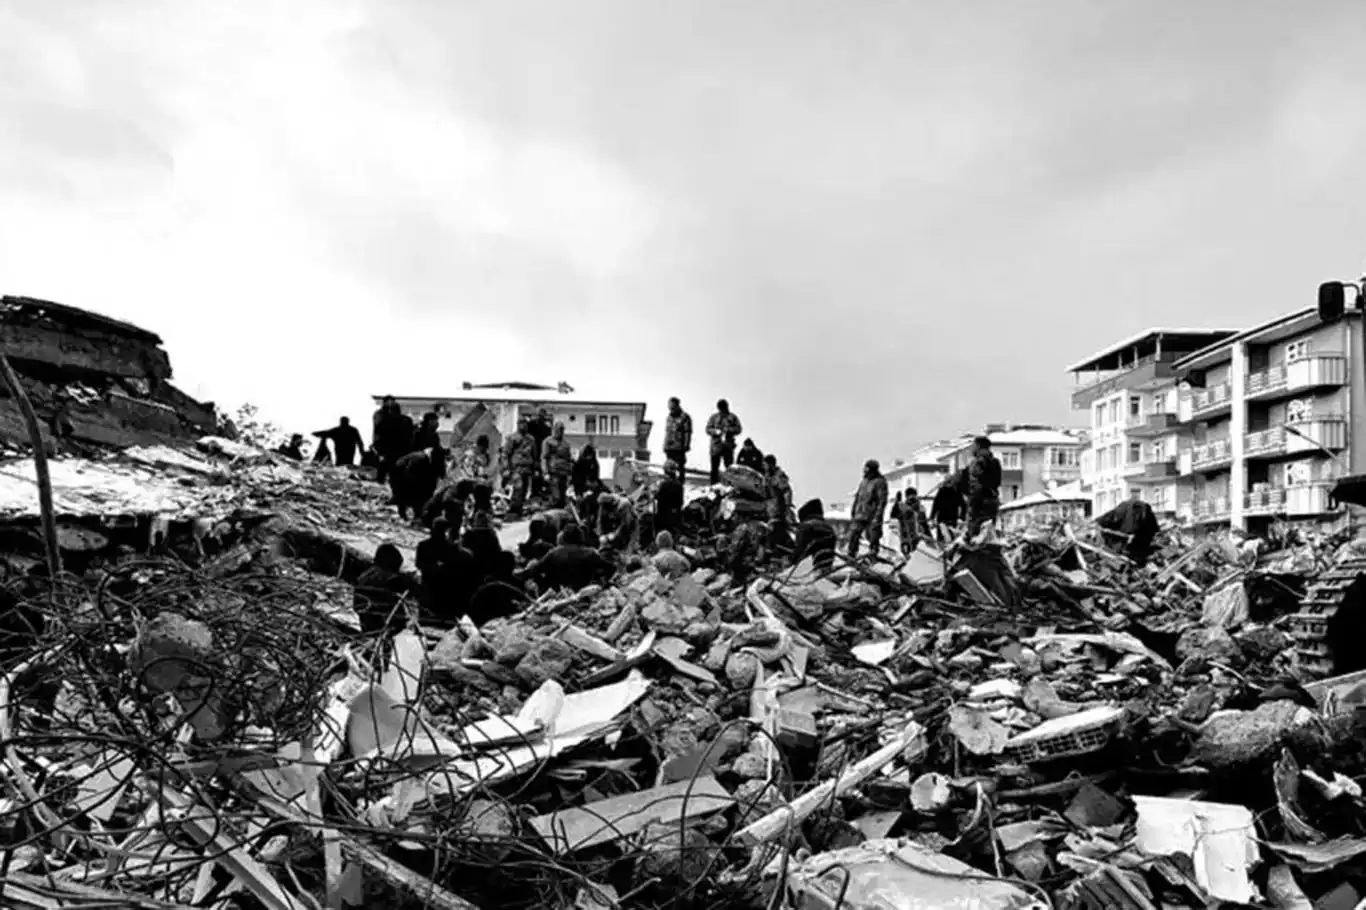 Türkiye marks one year since devastating earthquakes, scars remain